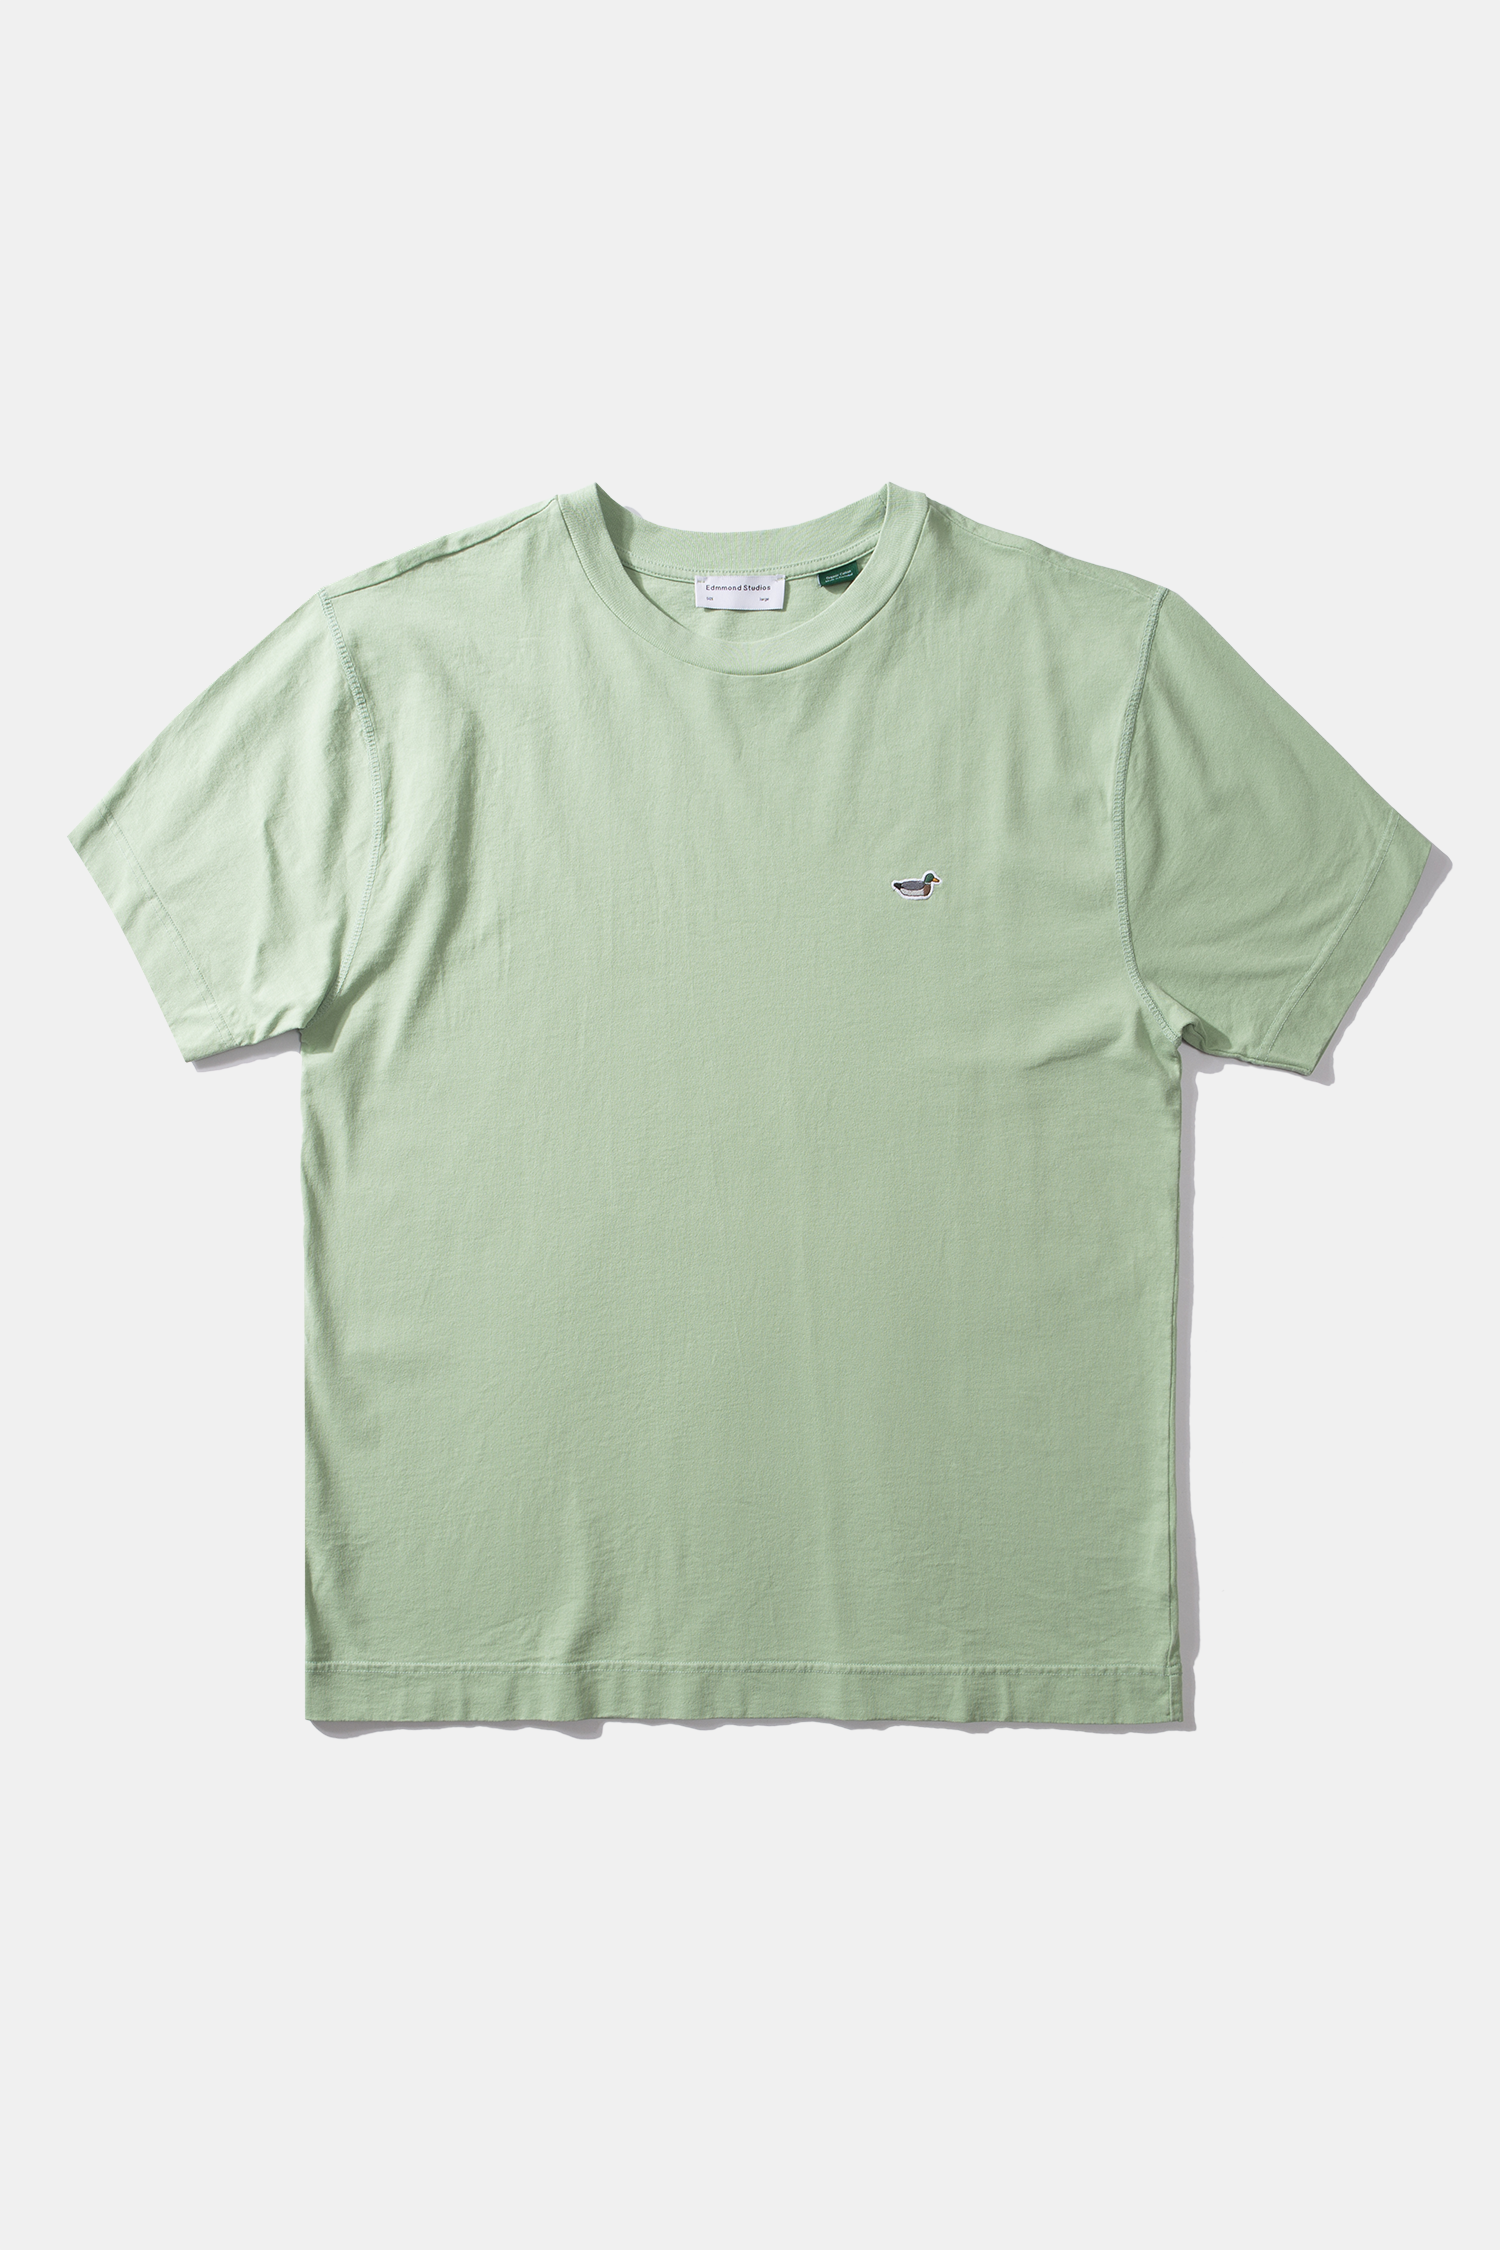 Edmmond Studio Mint Duck Patch T-Shirt